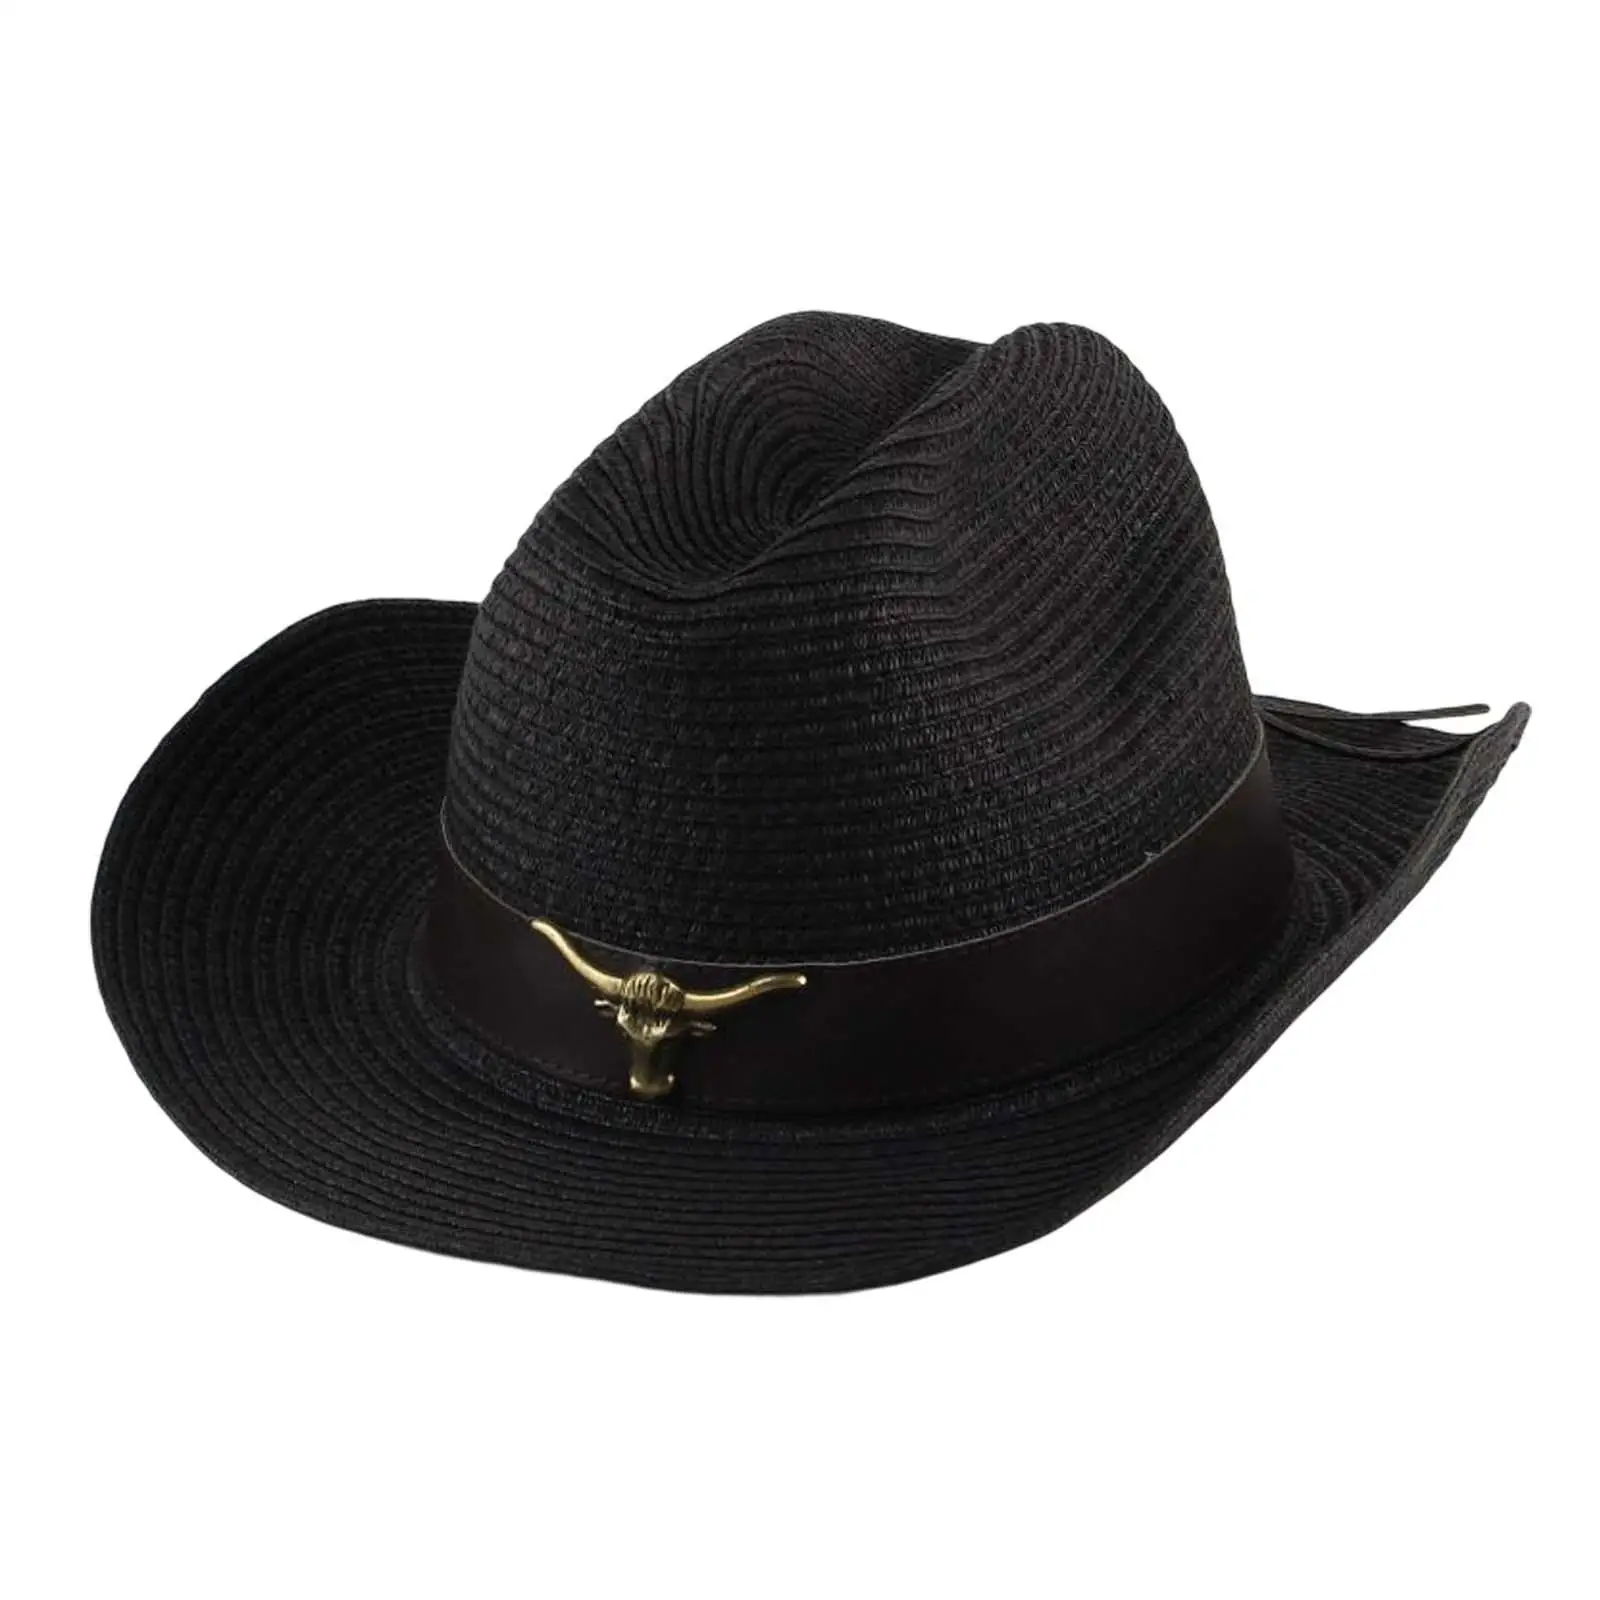 Western Cowboy Hat Unisex Wide Brim Sunshade Hat for Holiday Summer Beach Adults